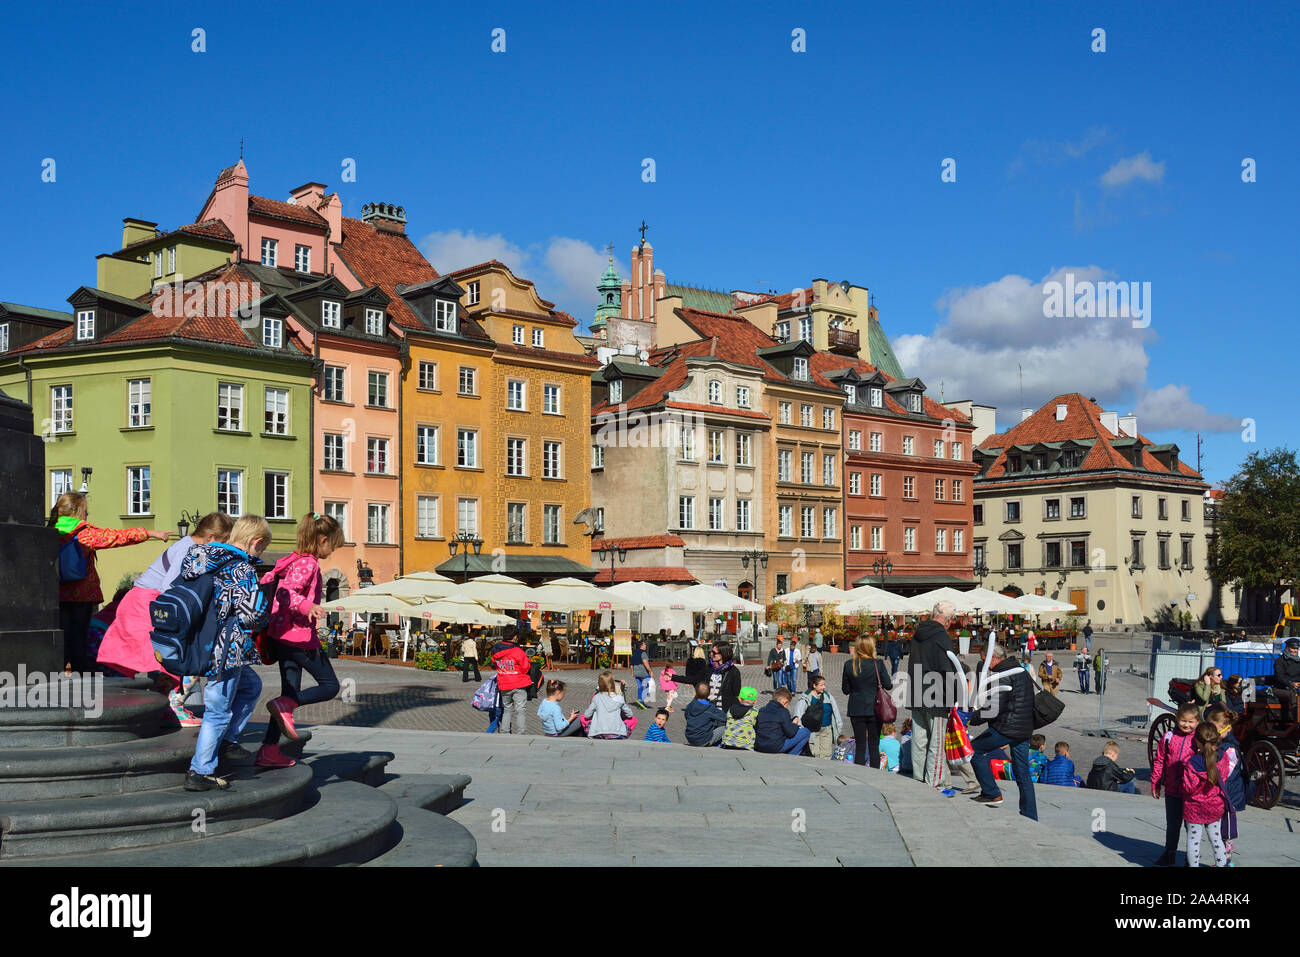 Zamkowi square, the main entrance to the old town (Stare Miasto) of Warsaw, a Unesco World Heritage Site. Poland Stock Photo